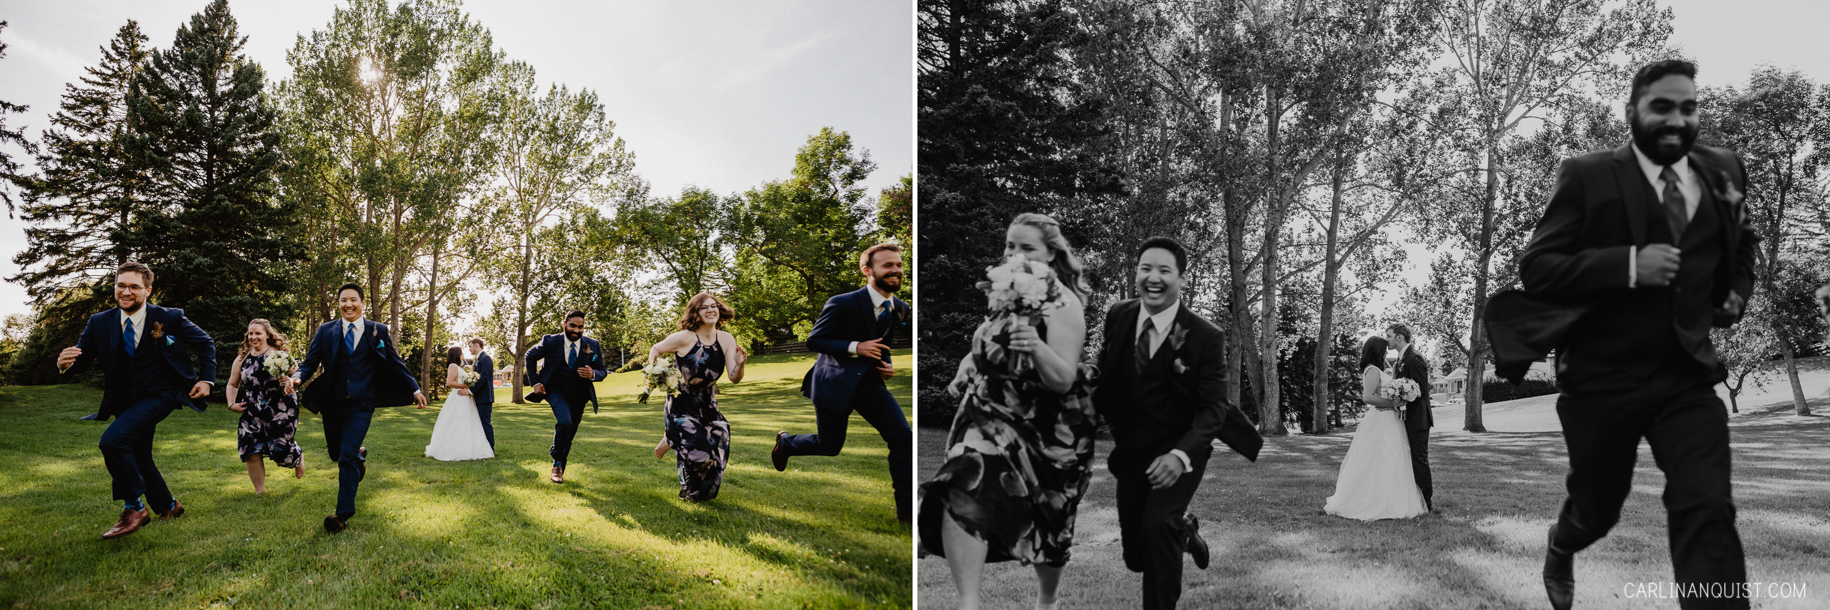 Bridal Party Running | Calgary Wedding Photographer